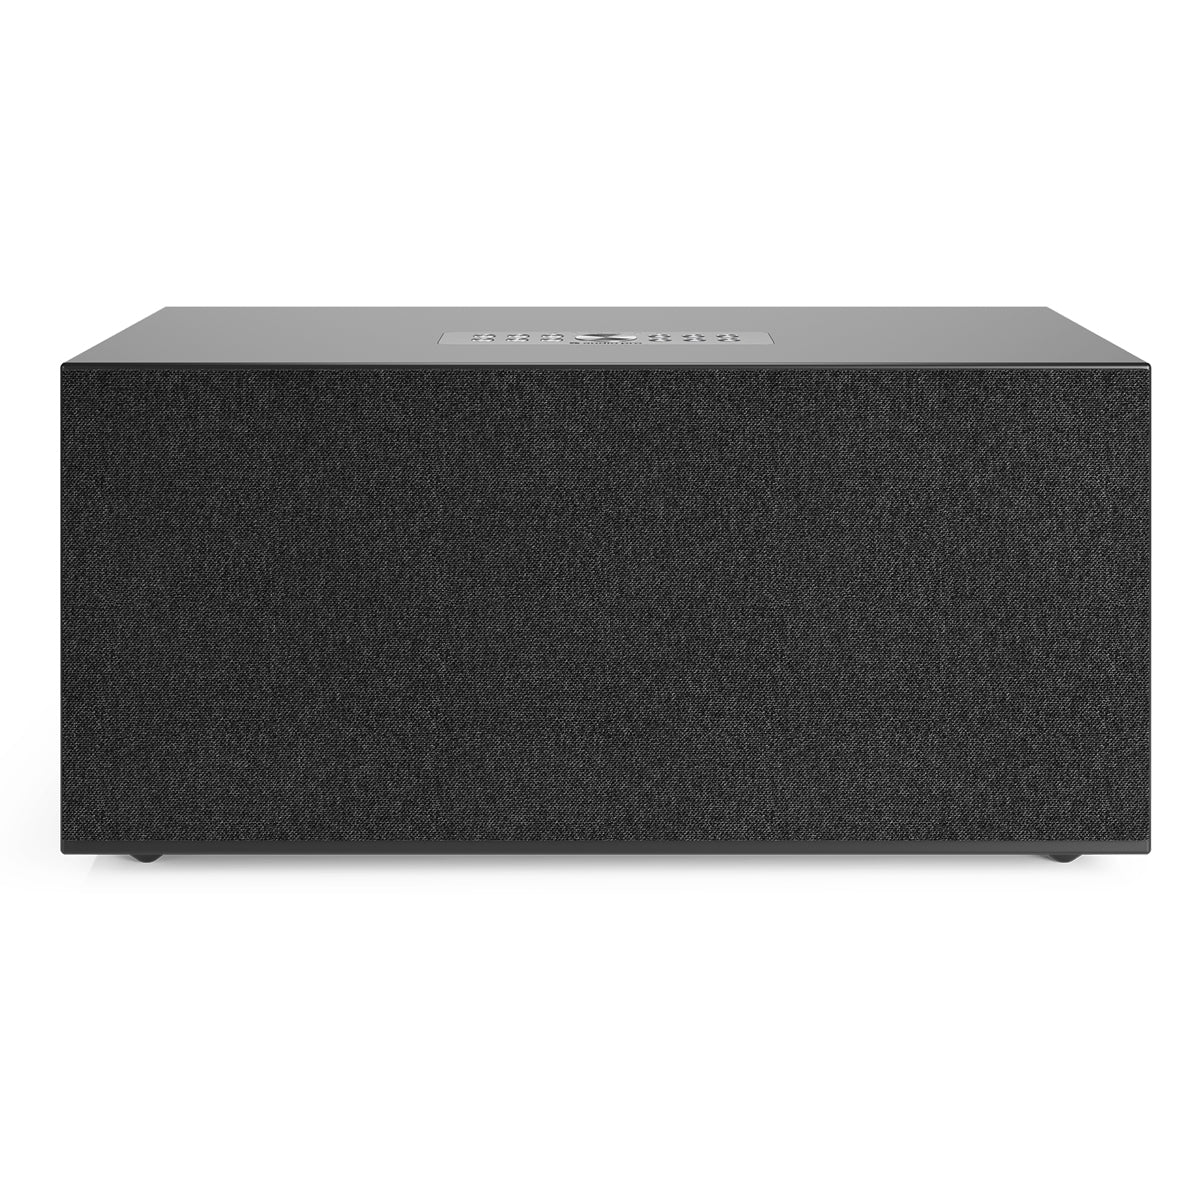 Audio Pro C20 Wireless Multiroom Speaker - Black